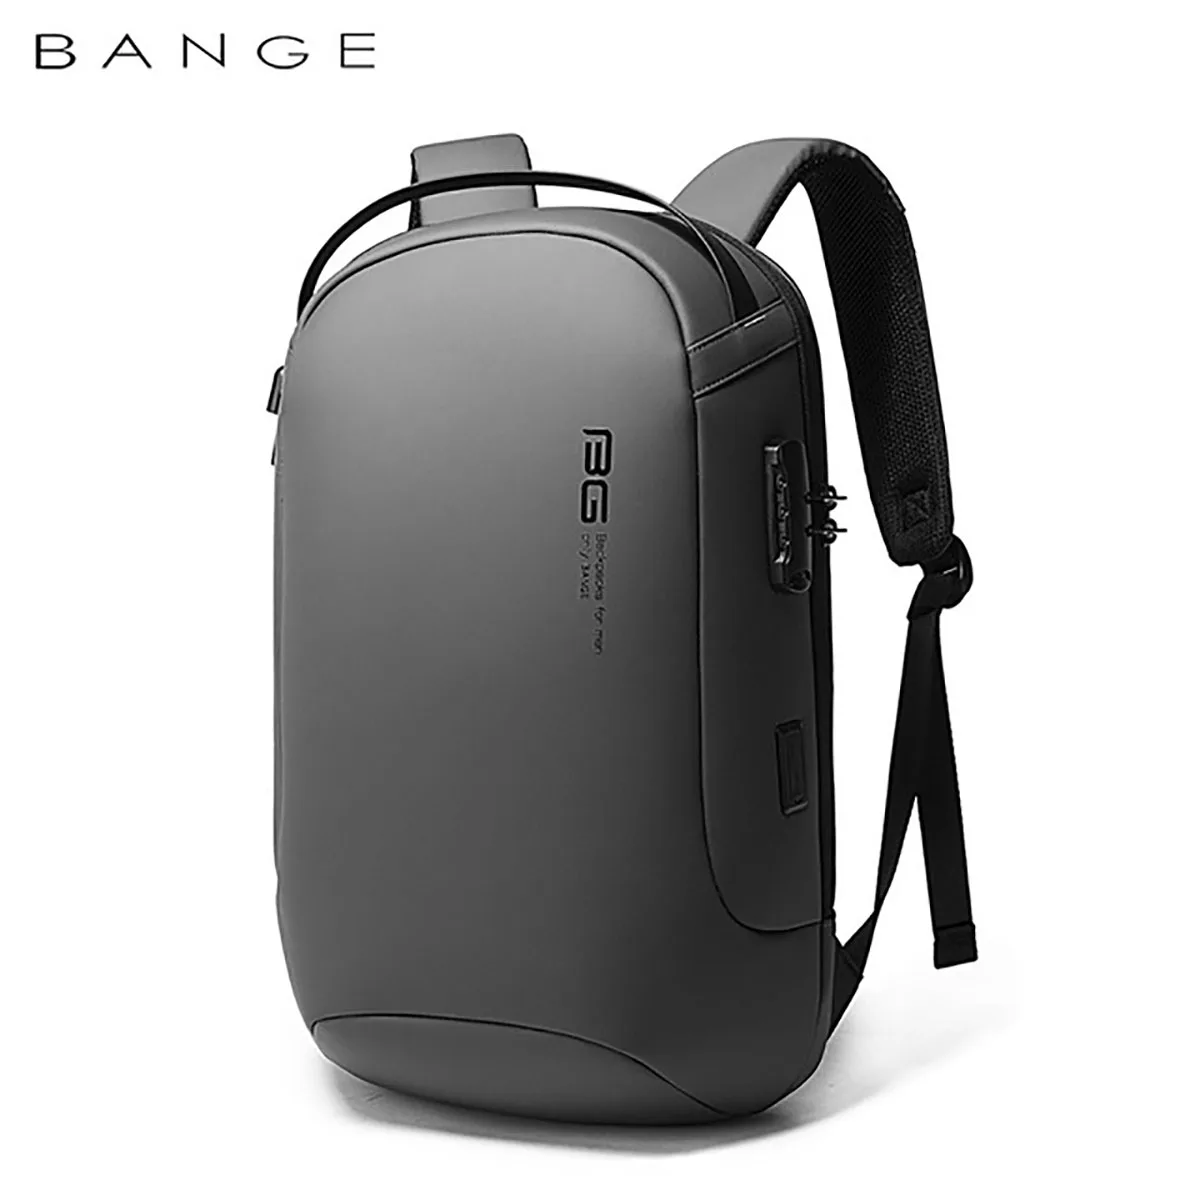 

BANGE рюкзак с защитой от краж с подходит для 15,6 дюймового ноутбука сумка Водонепроницаемый зарядка через USB кодовый замок Бизнес сумки на пле...